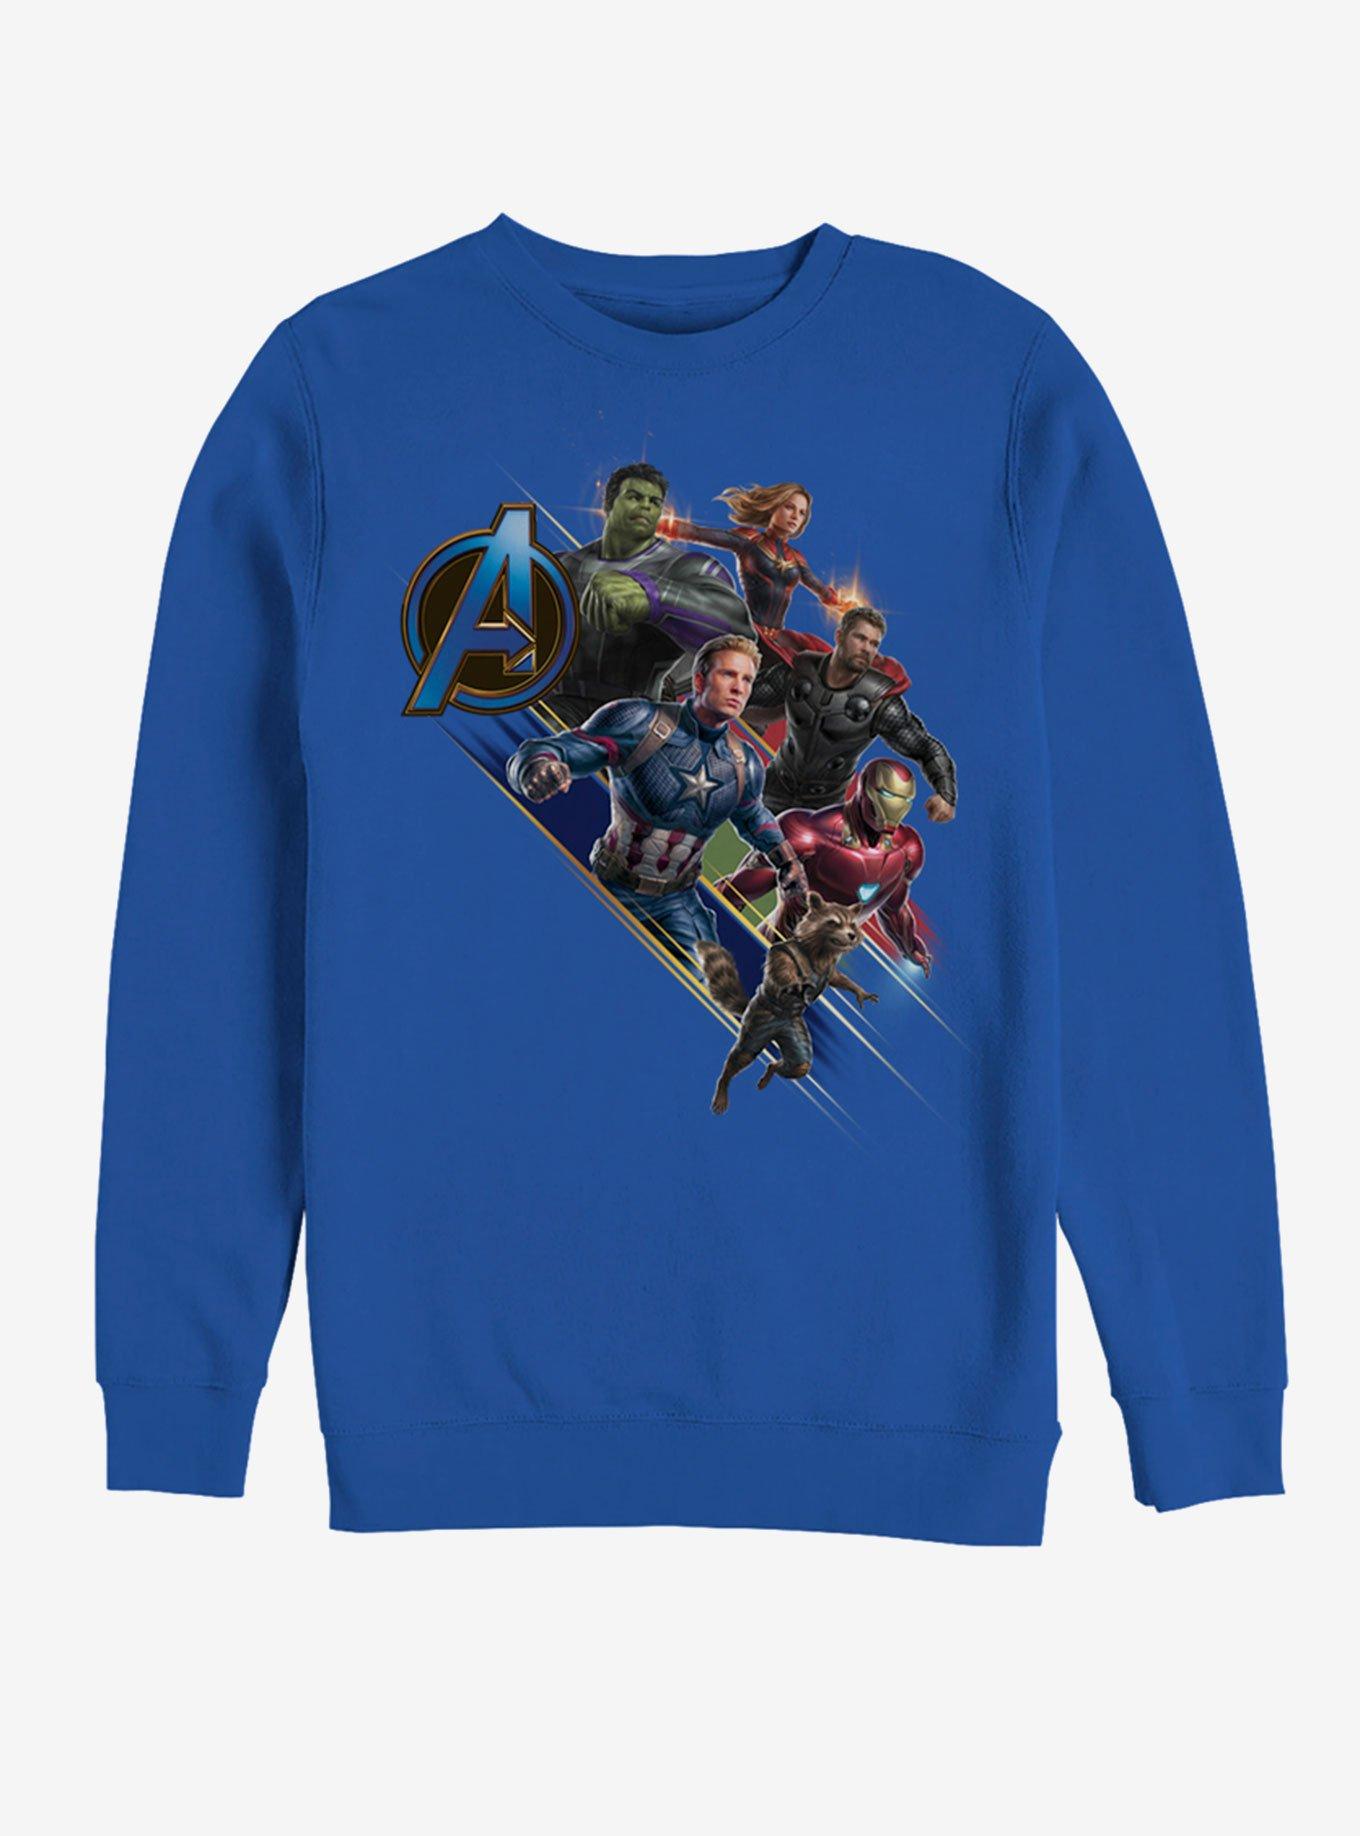 Marvel Avengers: Endgame Angled Shot Sweatshirt, ROYAL, hi-res